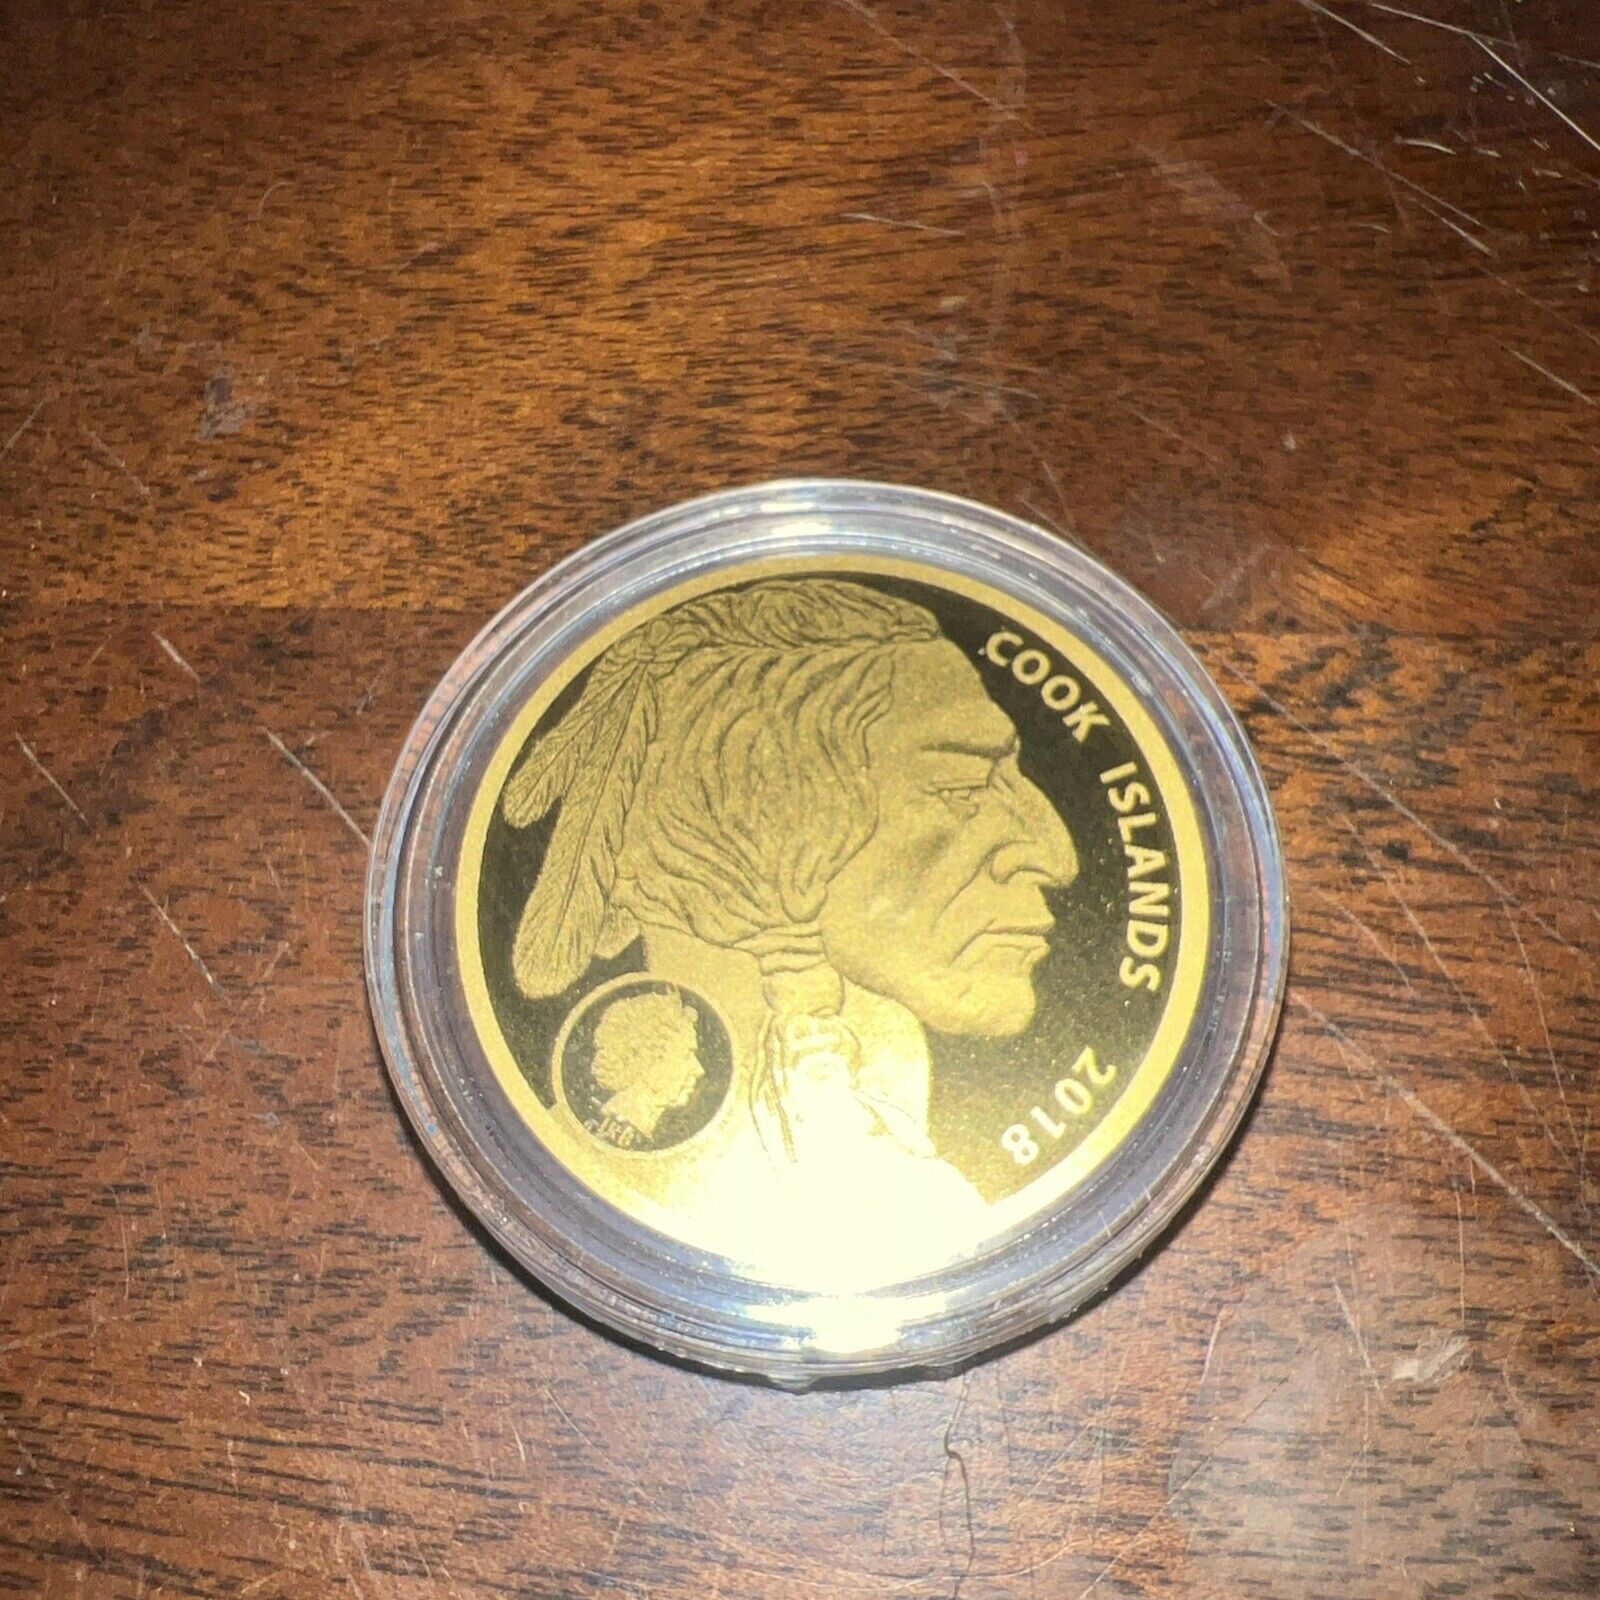 2018 Cook Islands $5 American Buffalo Thin Coin 200 mg .9999 Fine Gold